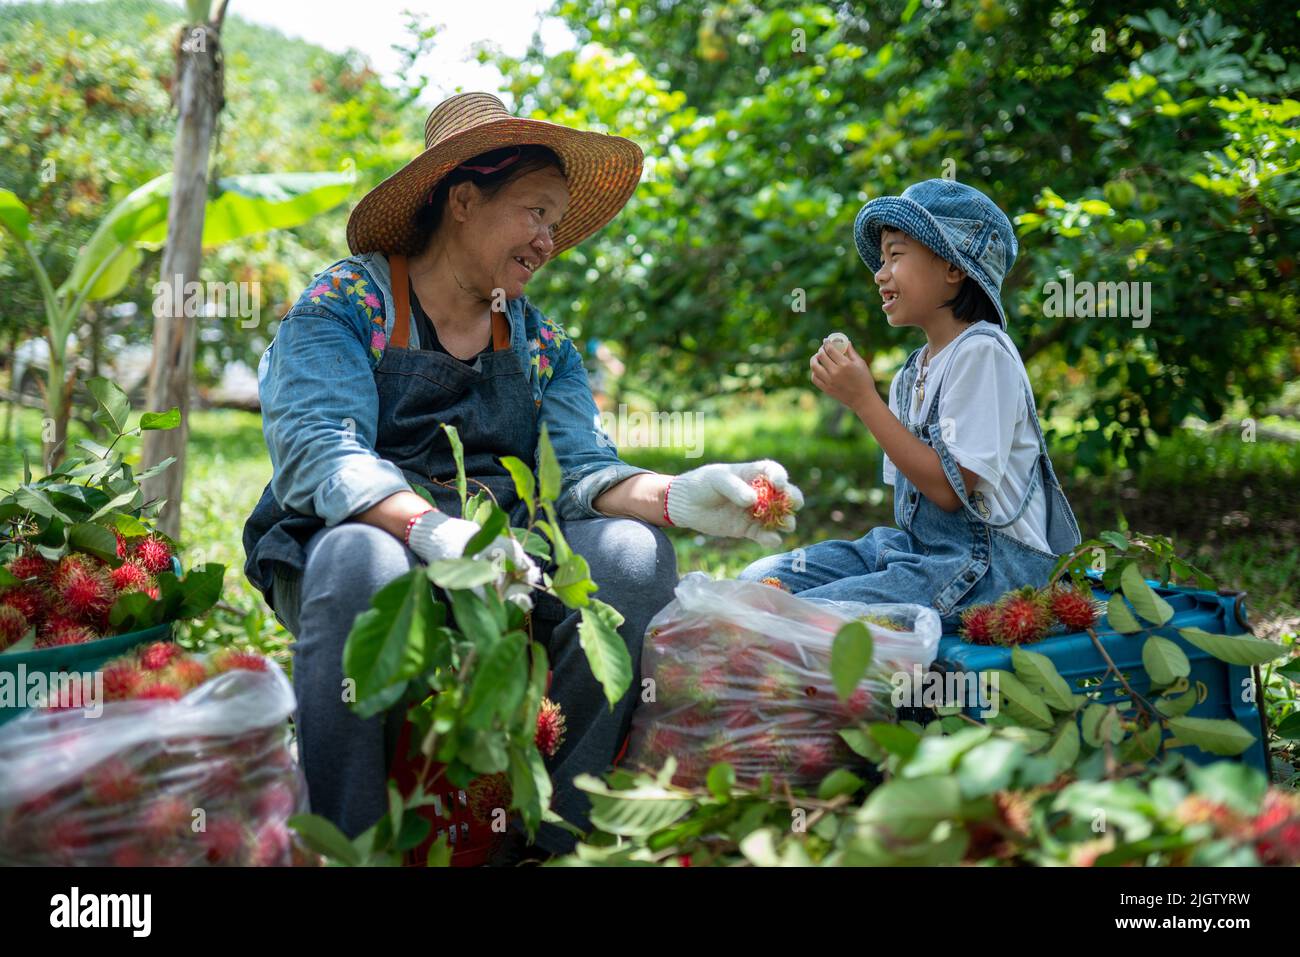 Grandma and granddaughter happy feeling harvest rambutans together Stock Photo